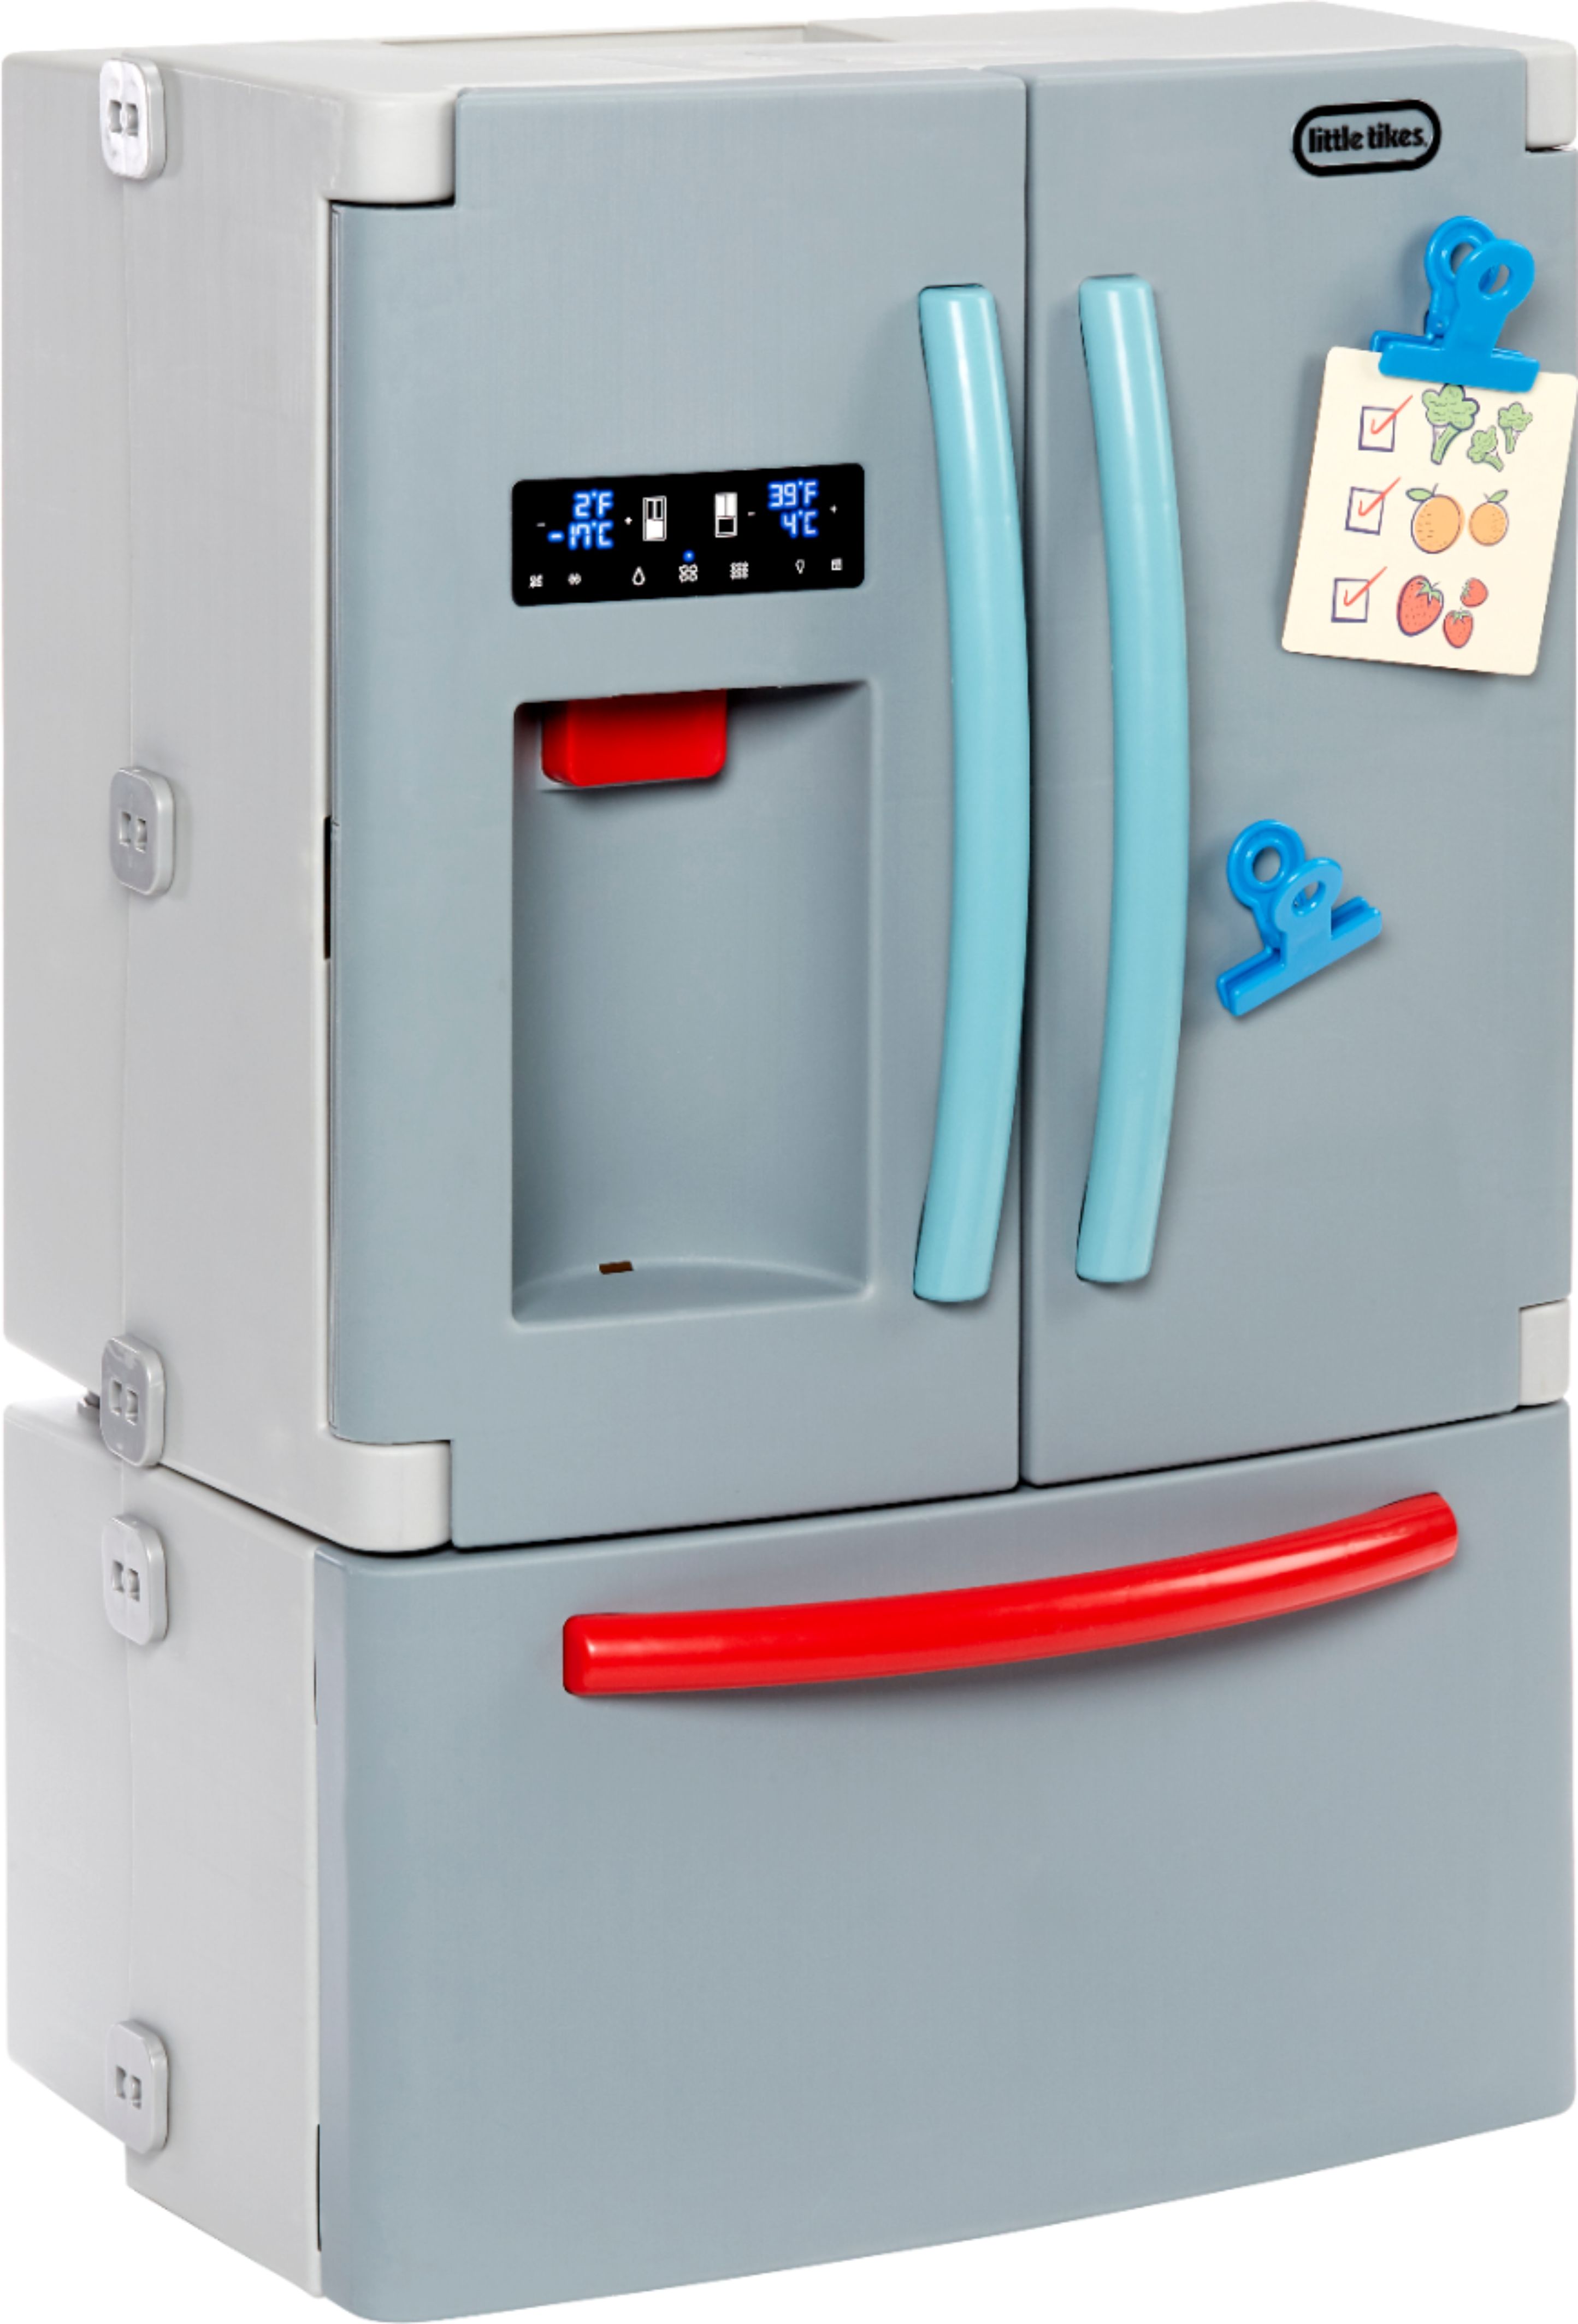 Angle View: Little Tikes First Fridge Refrigerator w/ Ice Dispenser, Kids Pretend Play Appliance, Kitchen, Playset Accessories Unique Toy